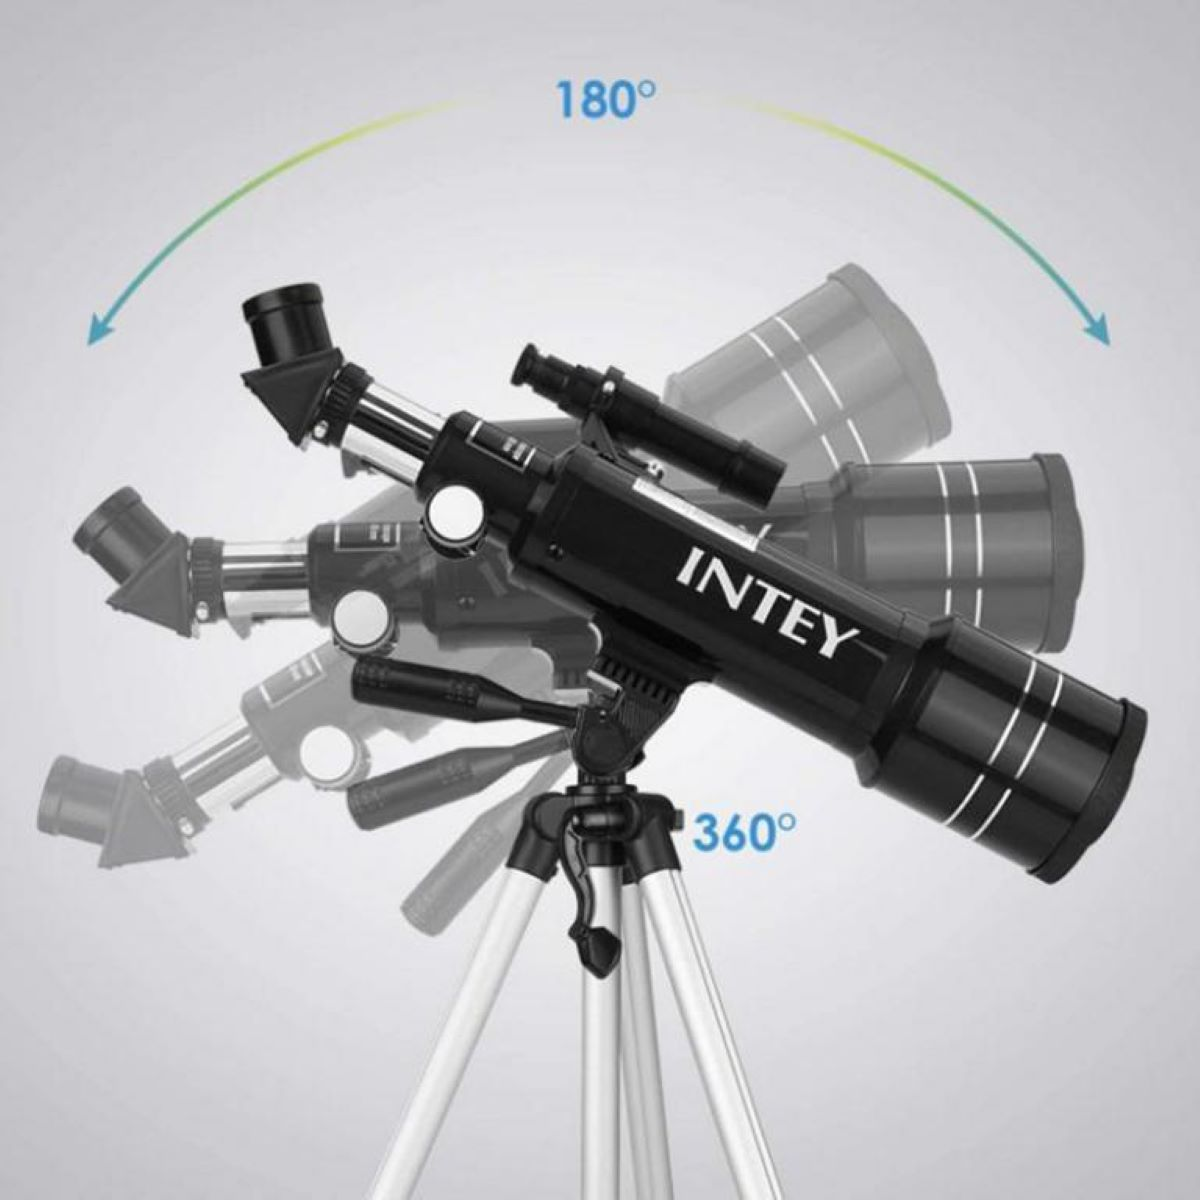 INTEY Binocular 16x, 67x, mm, Teleskop 70